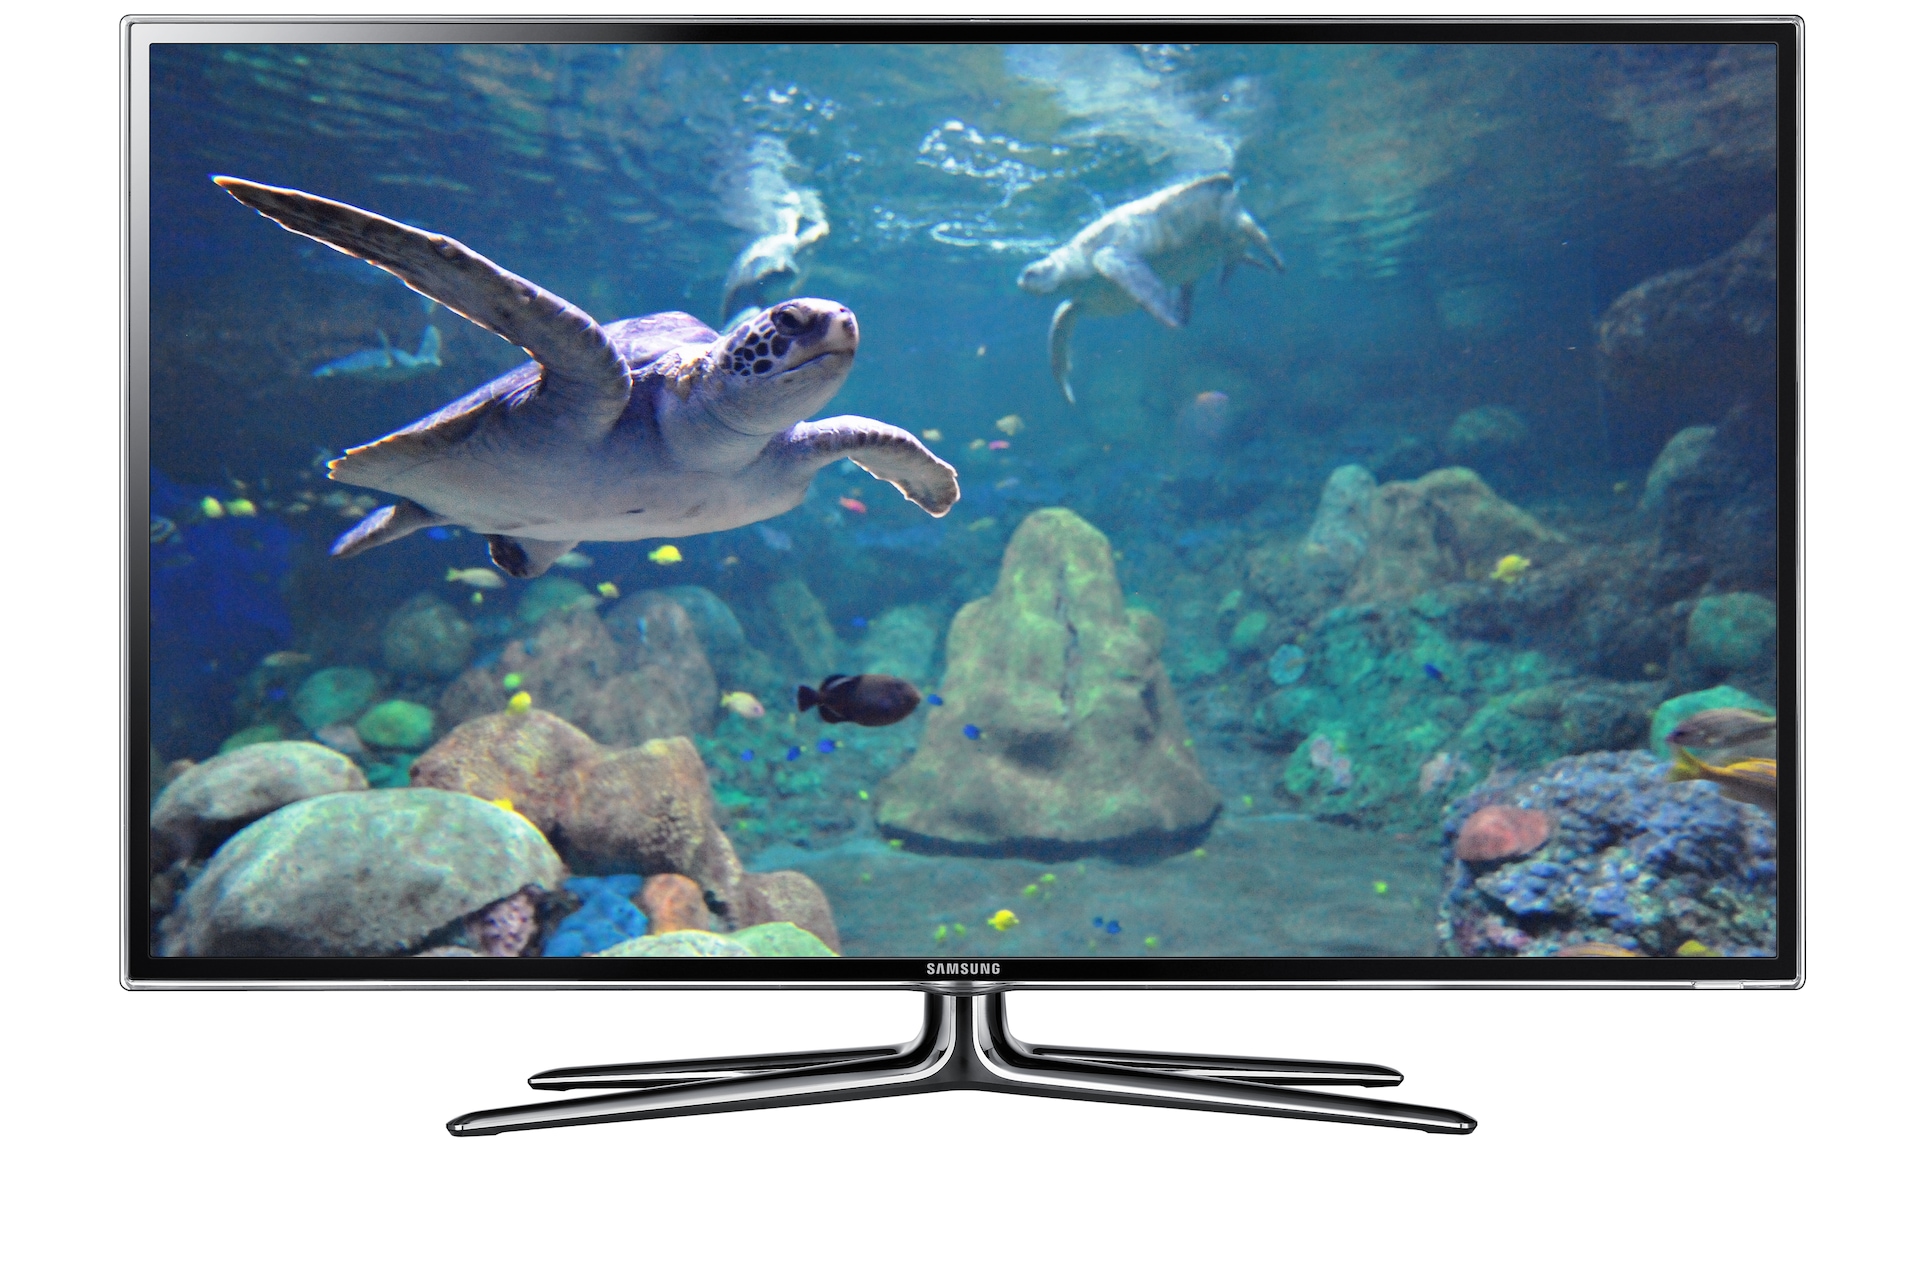 UE40D6750 LED-TV 40" | Samsung Service NL